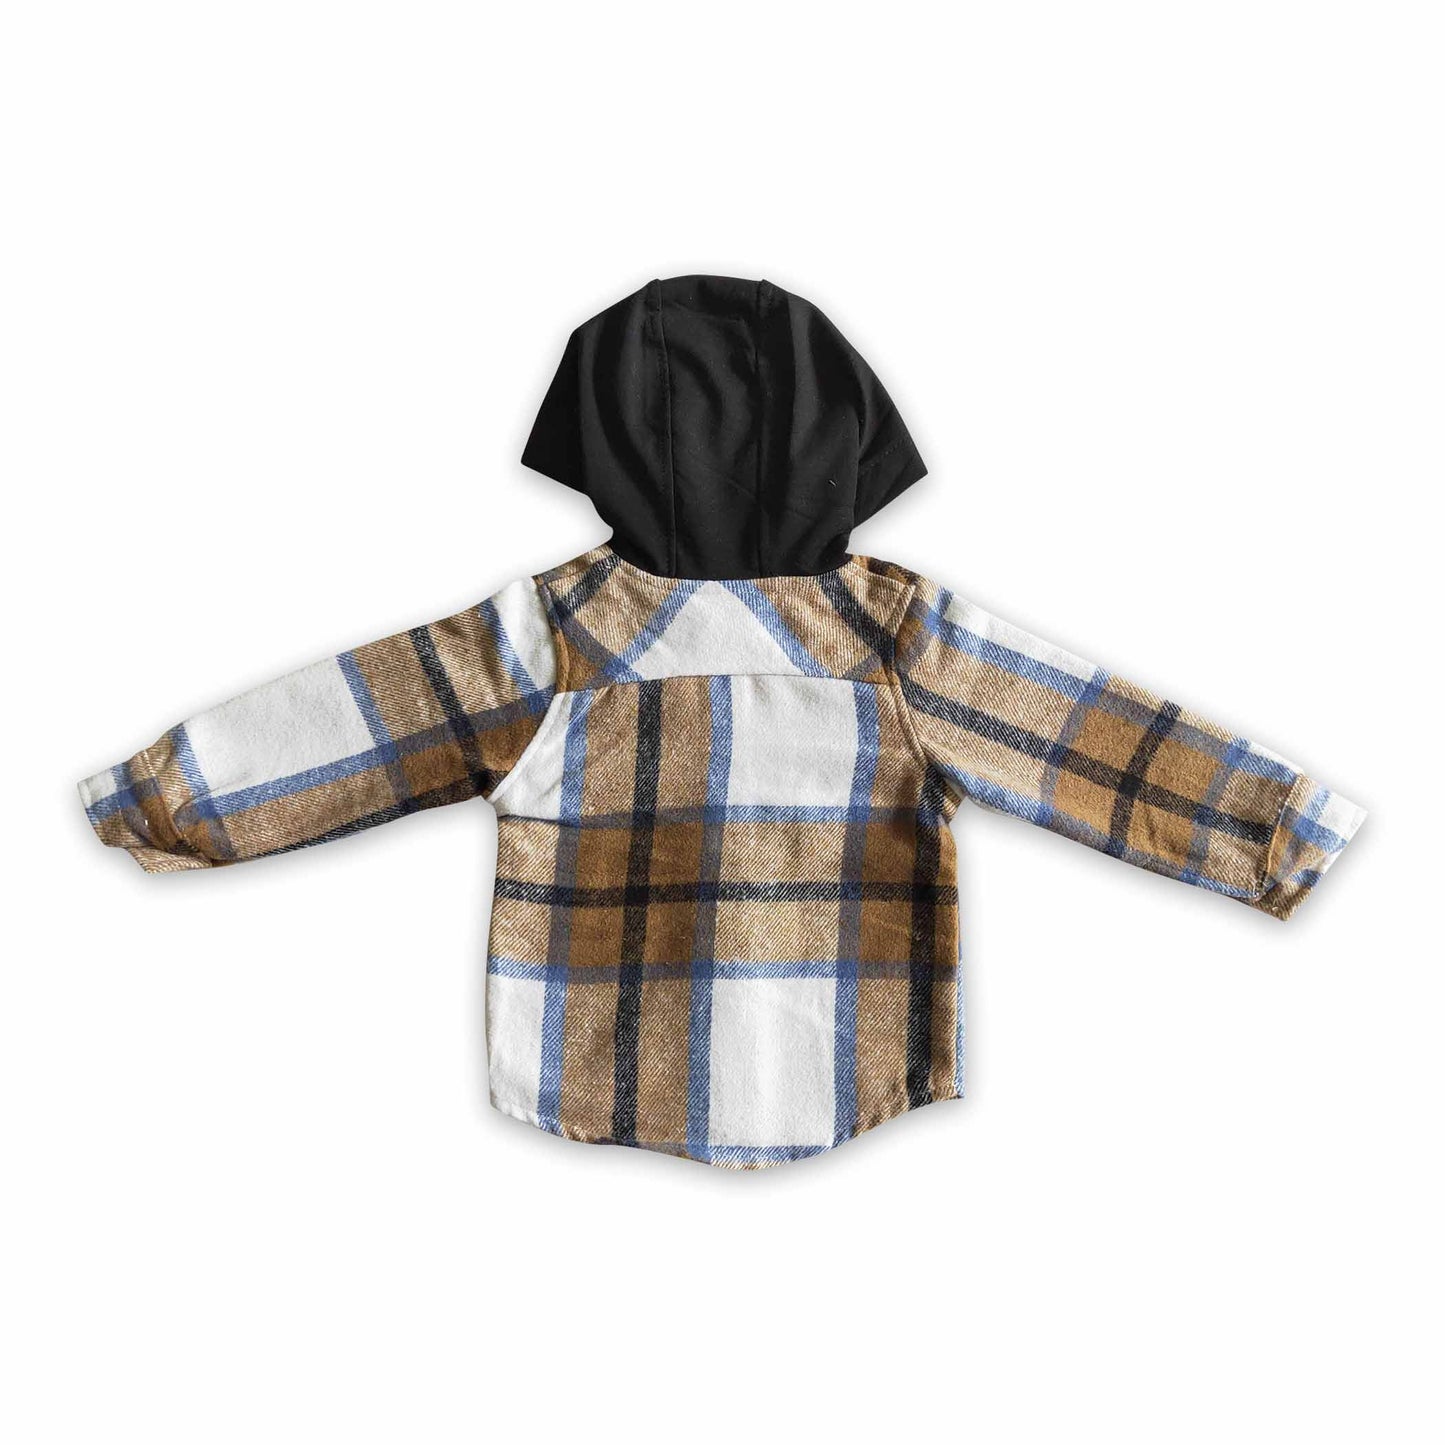 Khaki plaid cotton shirt pocket boy thick flannel button up hoodie